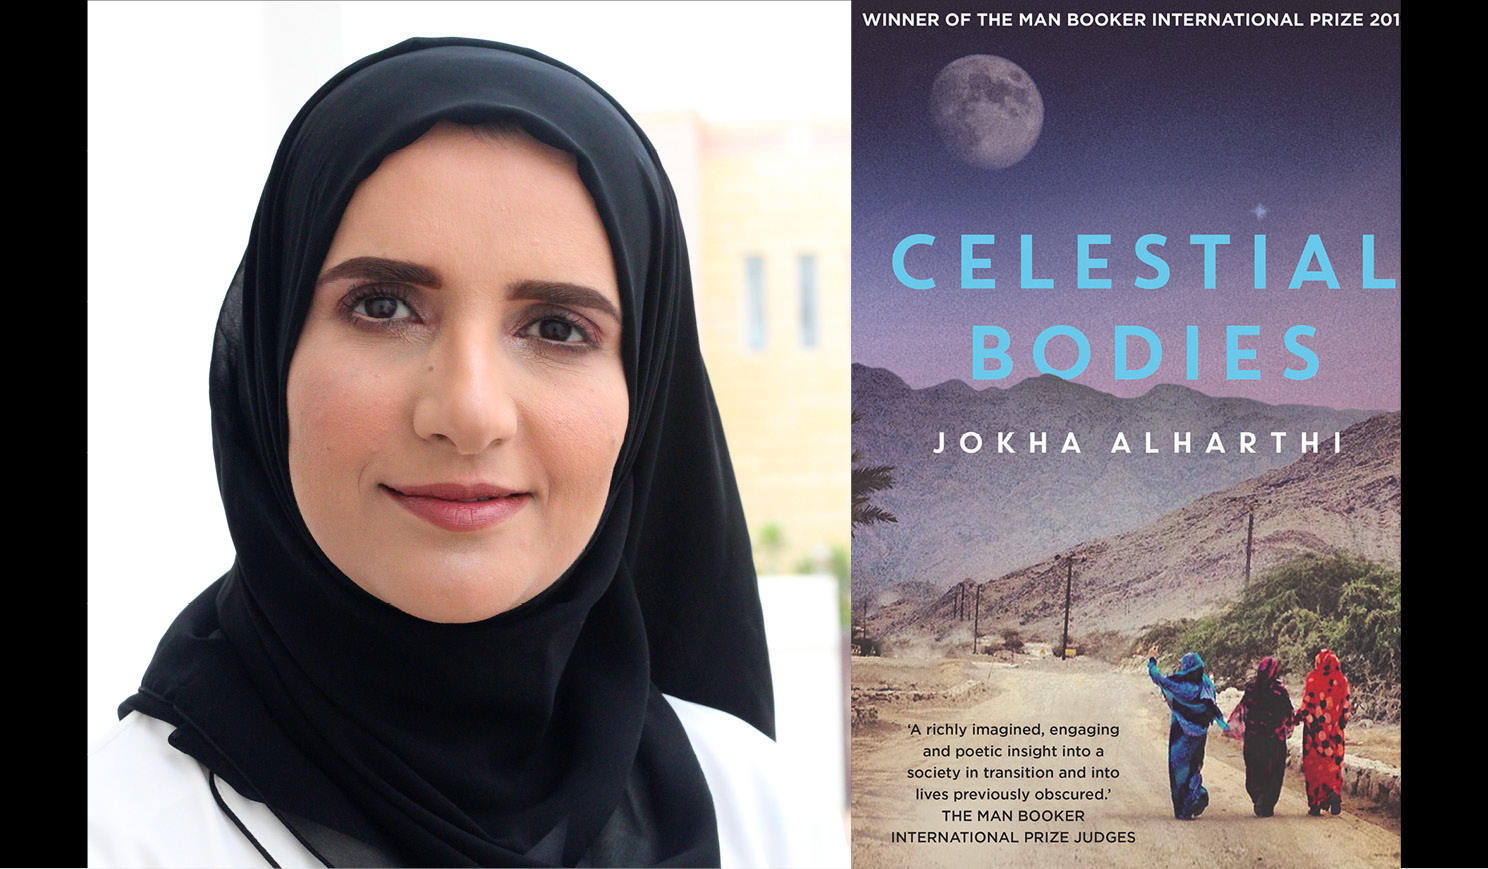 Jokha Alharthi's headshot alongside the cover of her book Celestial Bodies